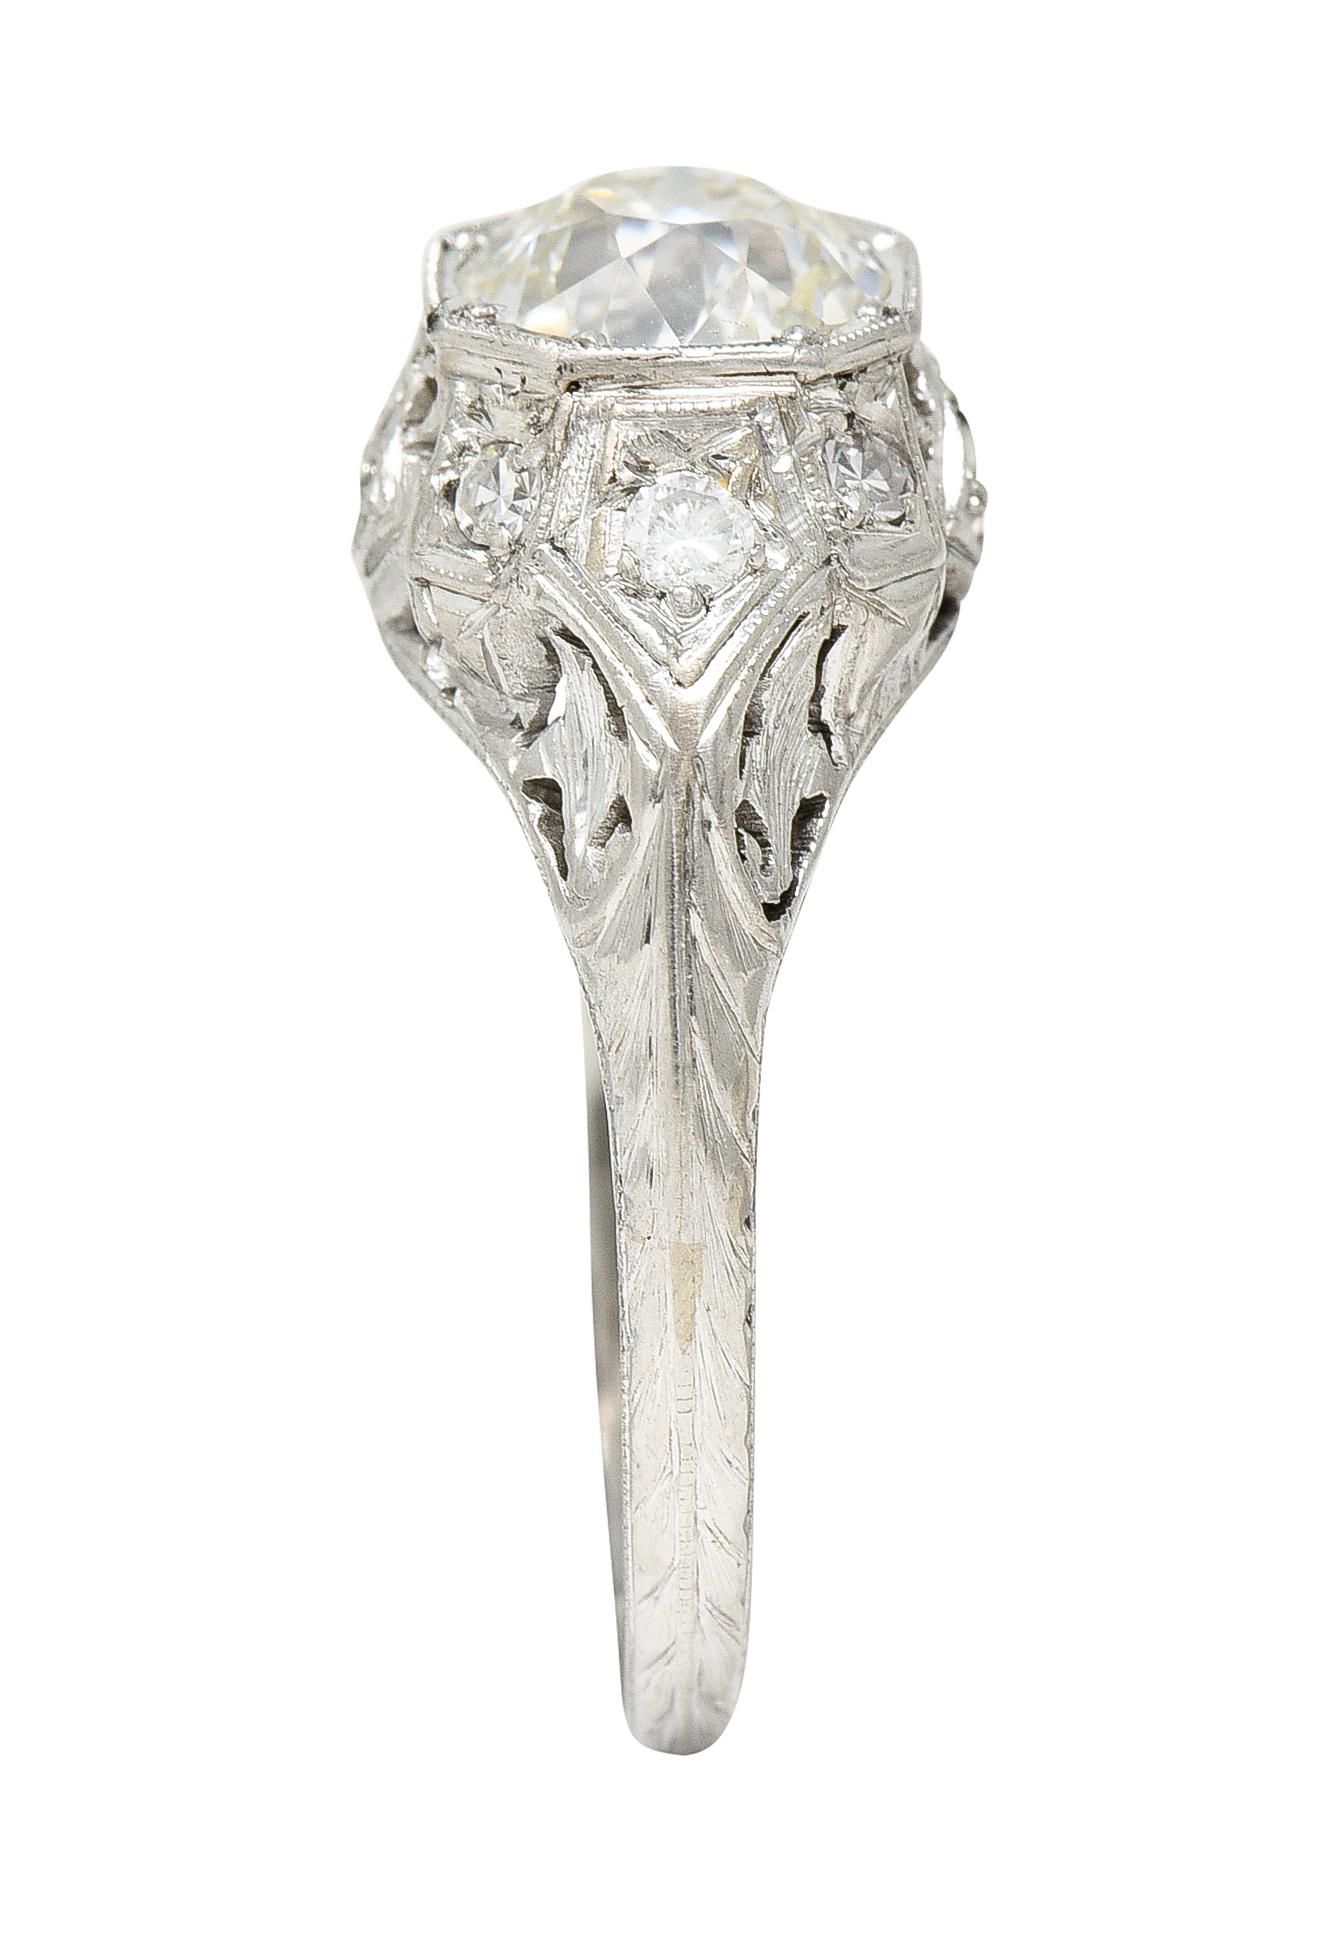 Edwardian Old European 1.64 Carats Diamond Platinum Foliate Engagement Ring For Sale 4